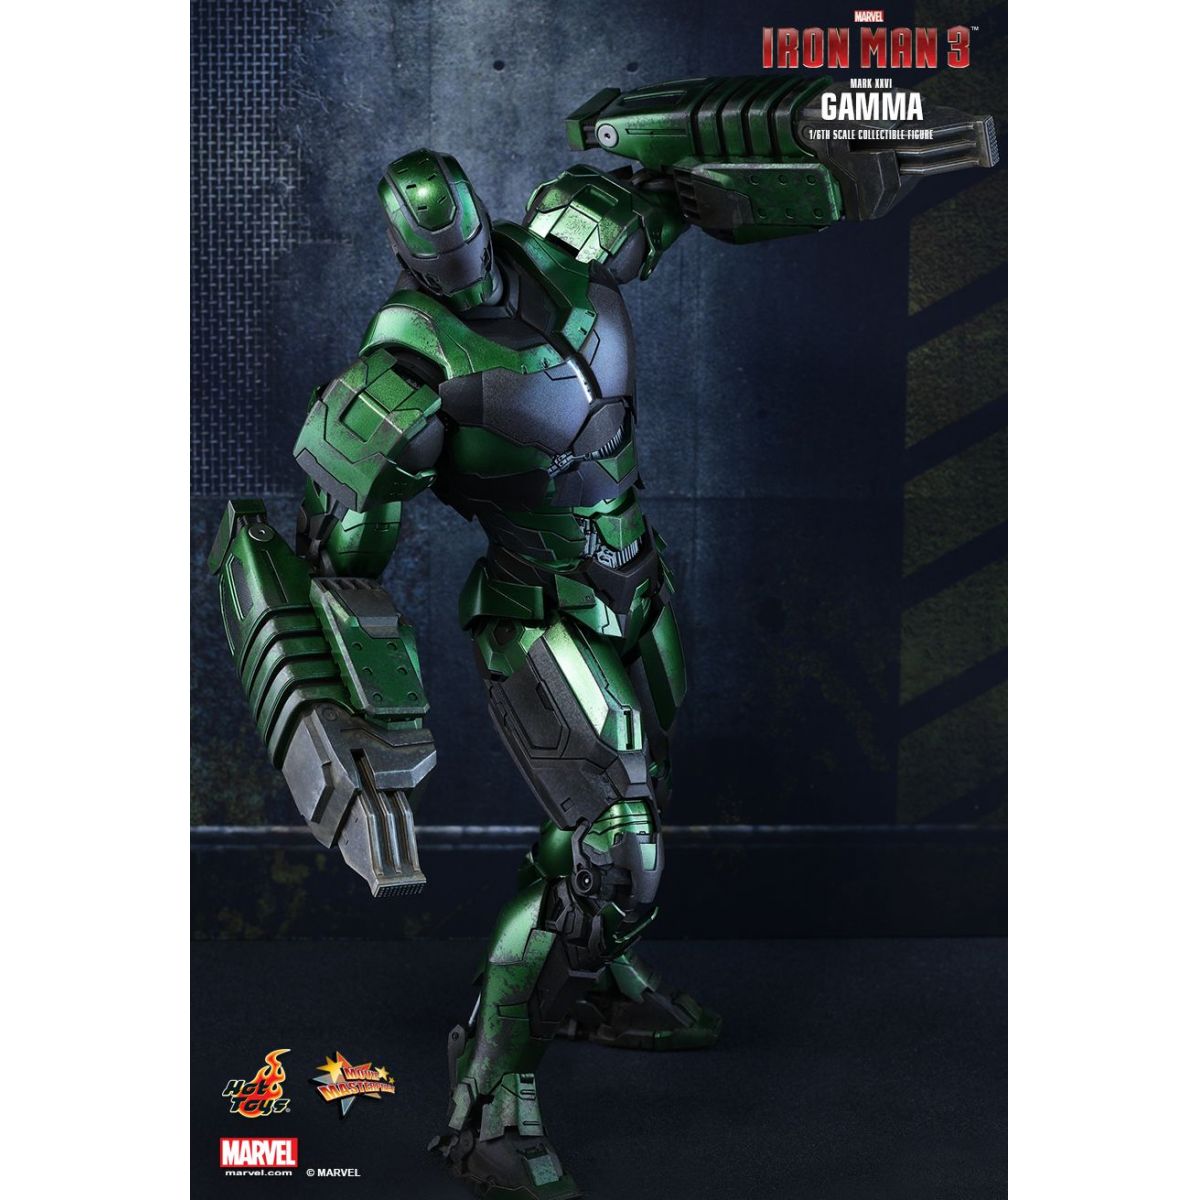 Boneco Iron Man Mark XXVI Gamma: Homem de Ferro 3 (Iron Man 3) Exclusive Escala 1/6 - Hot Toys